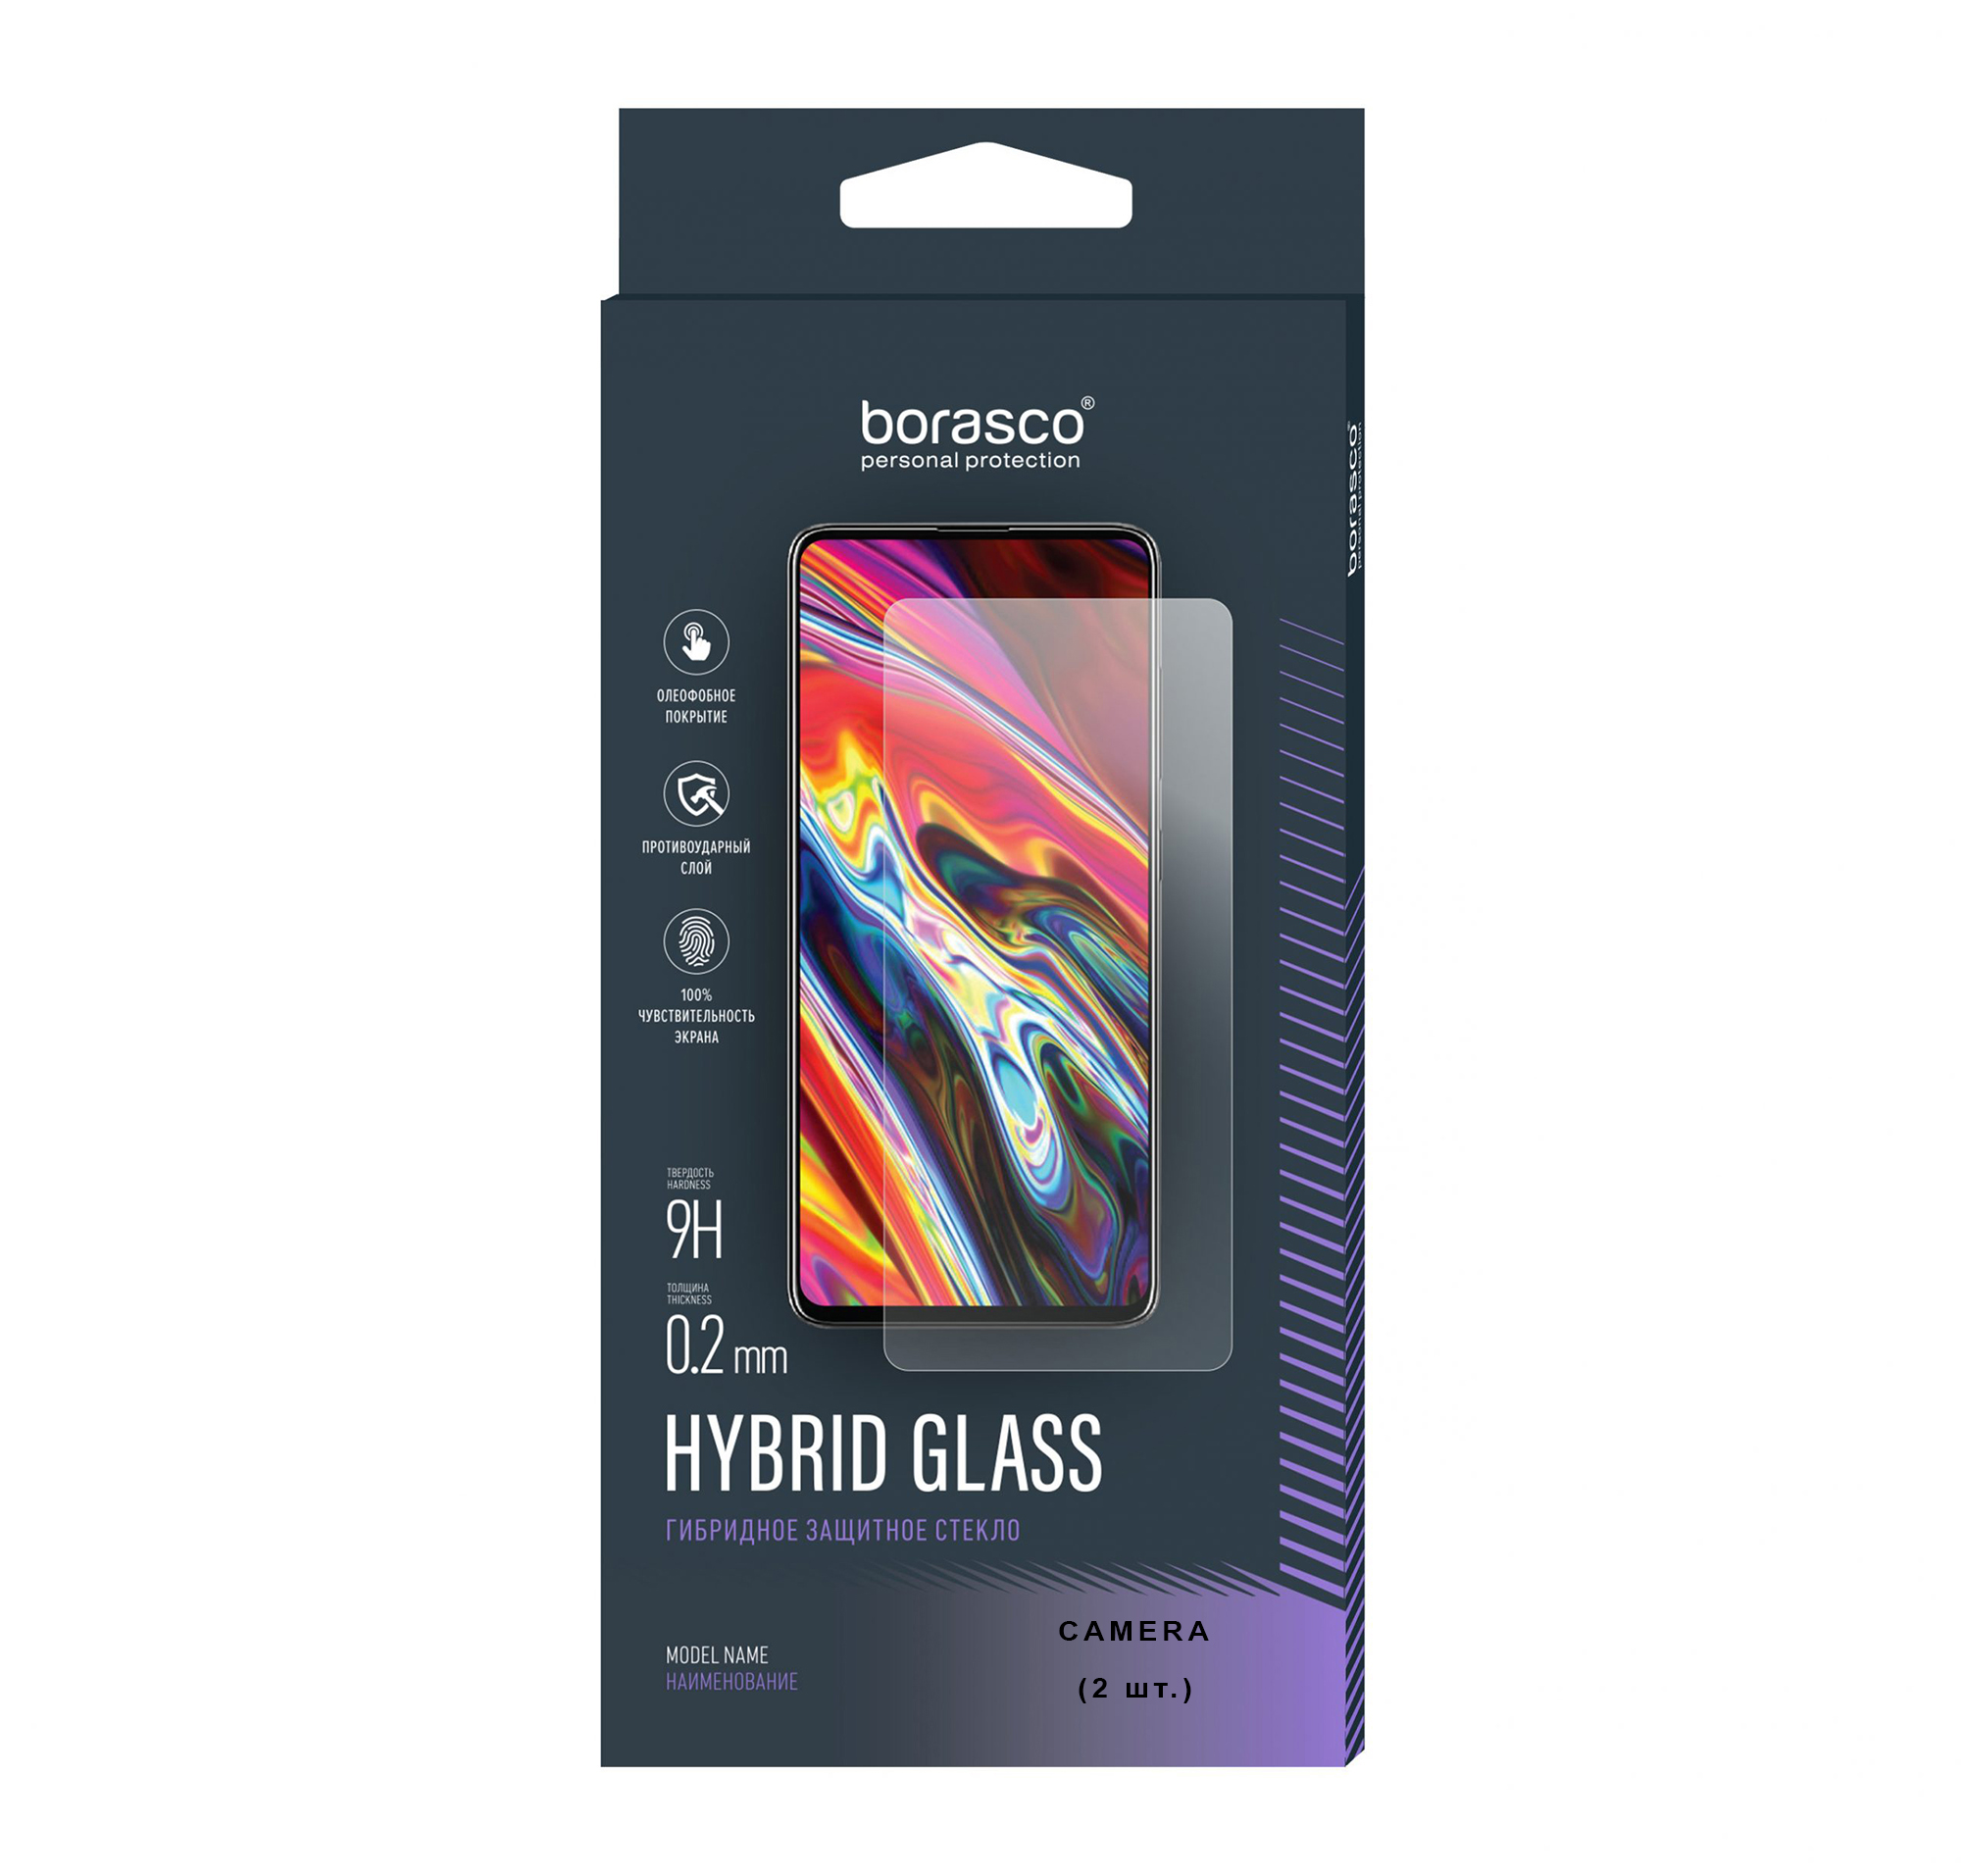 Защитное стекло (Экран+Камера) Hybrid Glass для Vivo Y19 силиконовый чехол на vivo y19 шрам для виво ю19